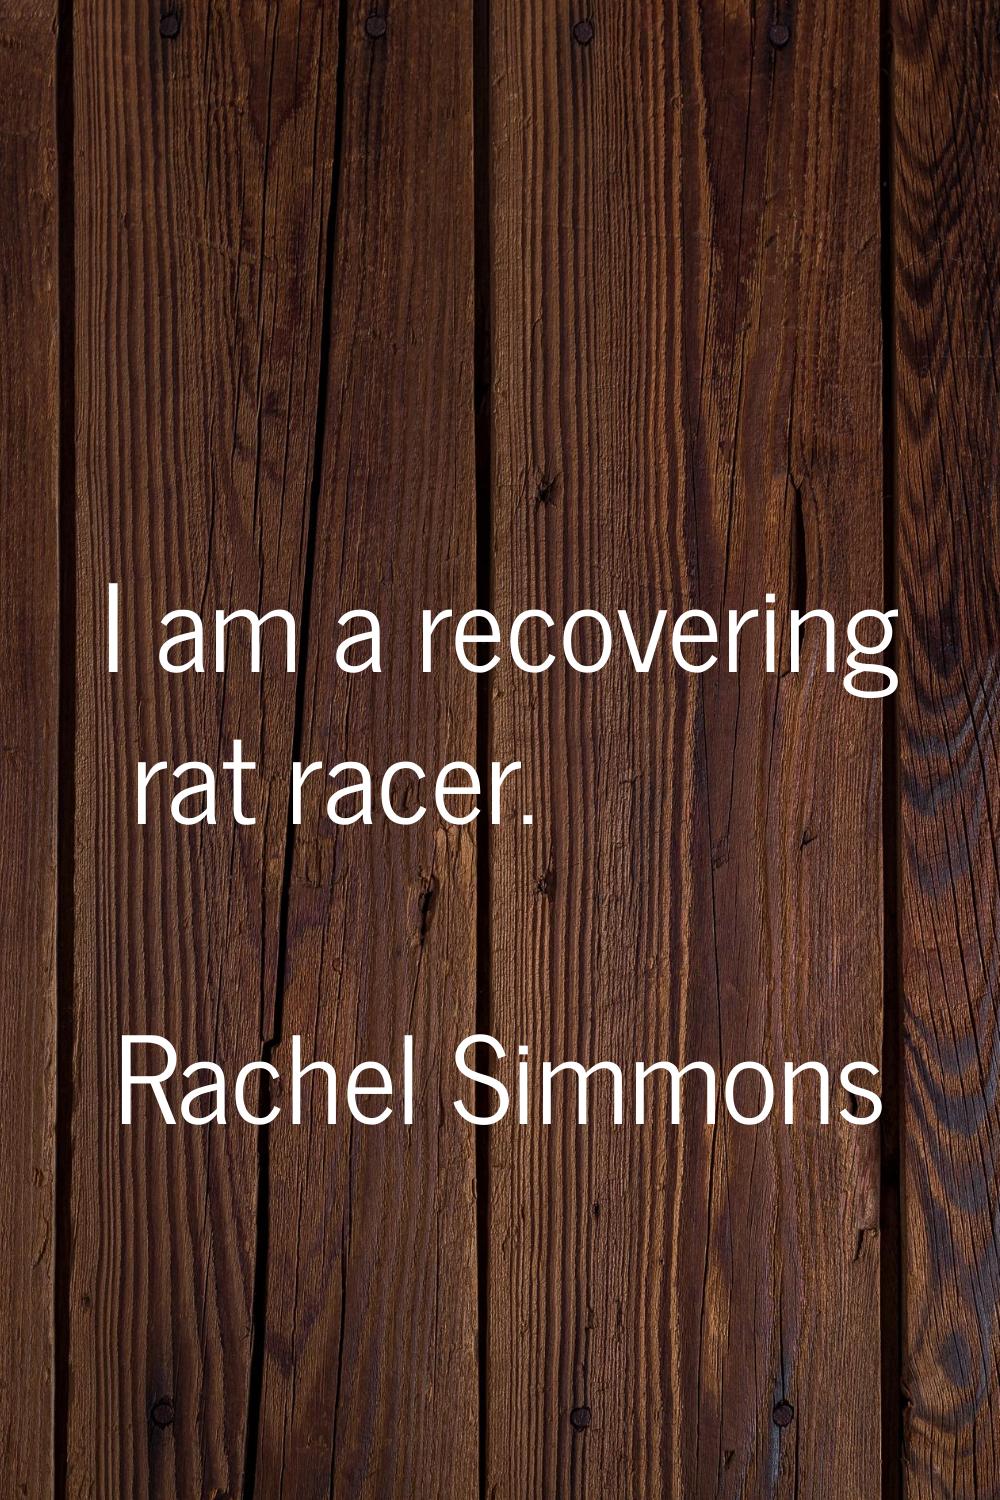 I am a recovering rat racer.